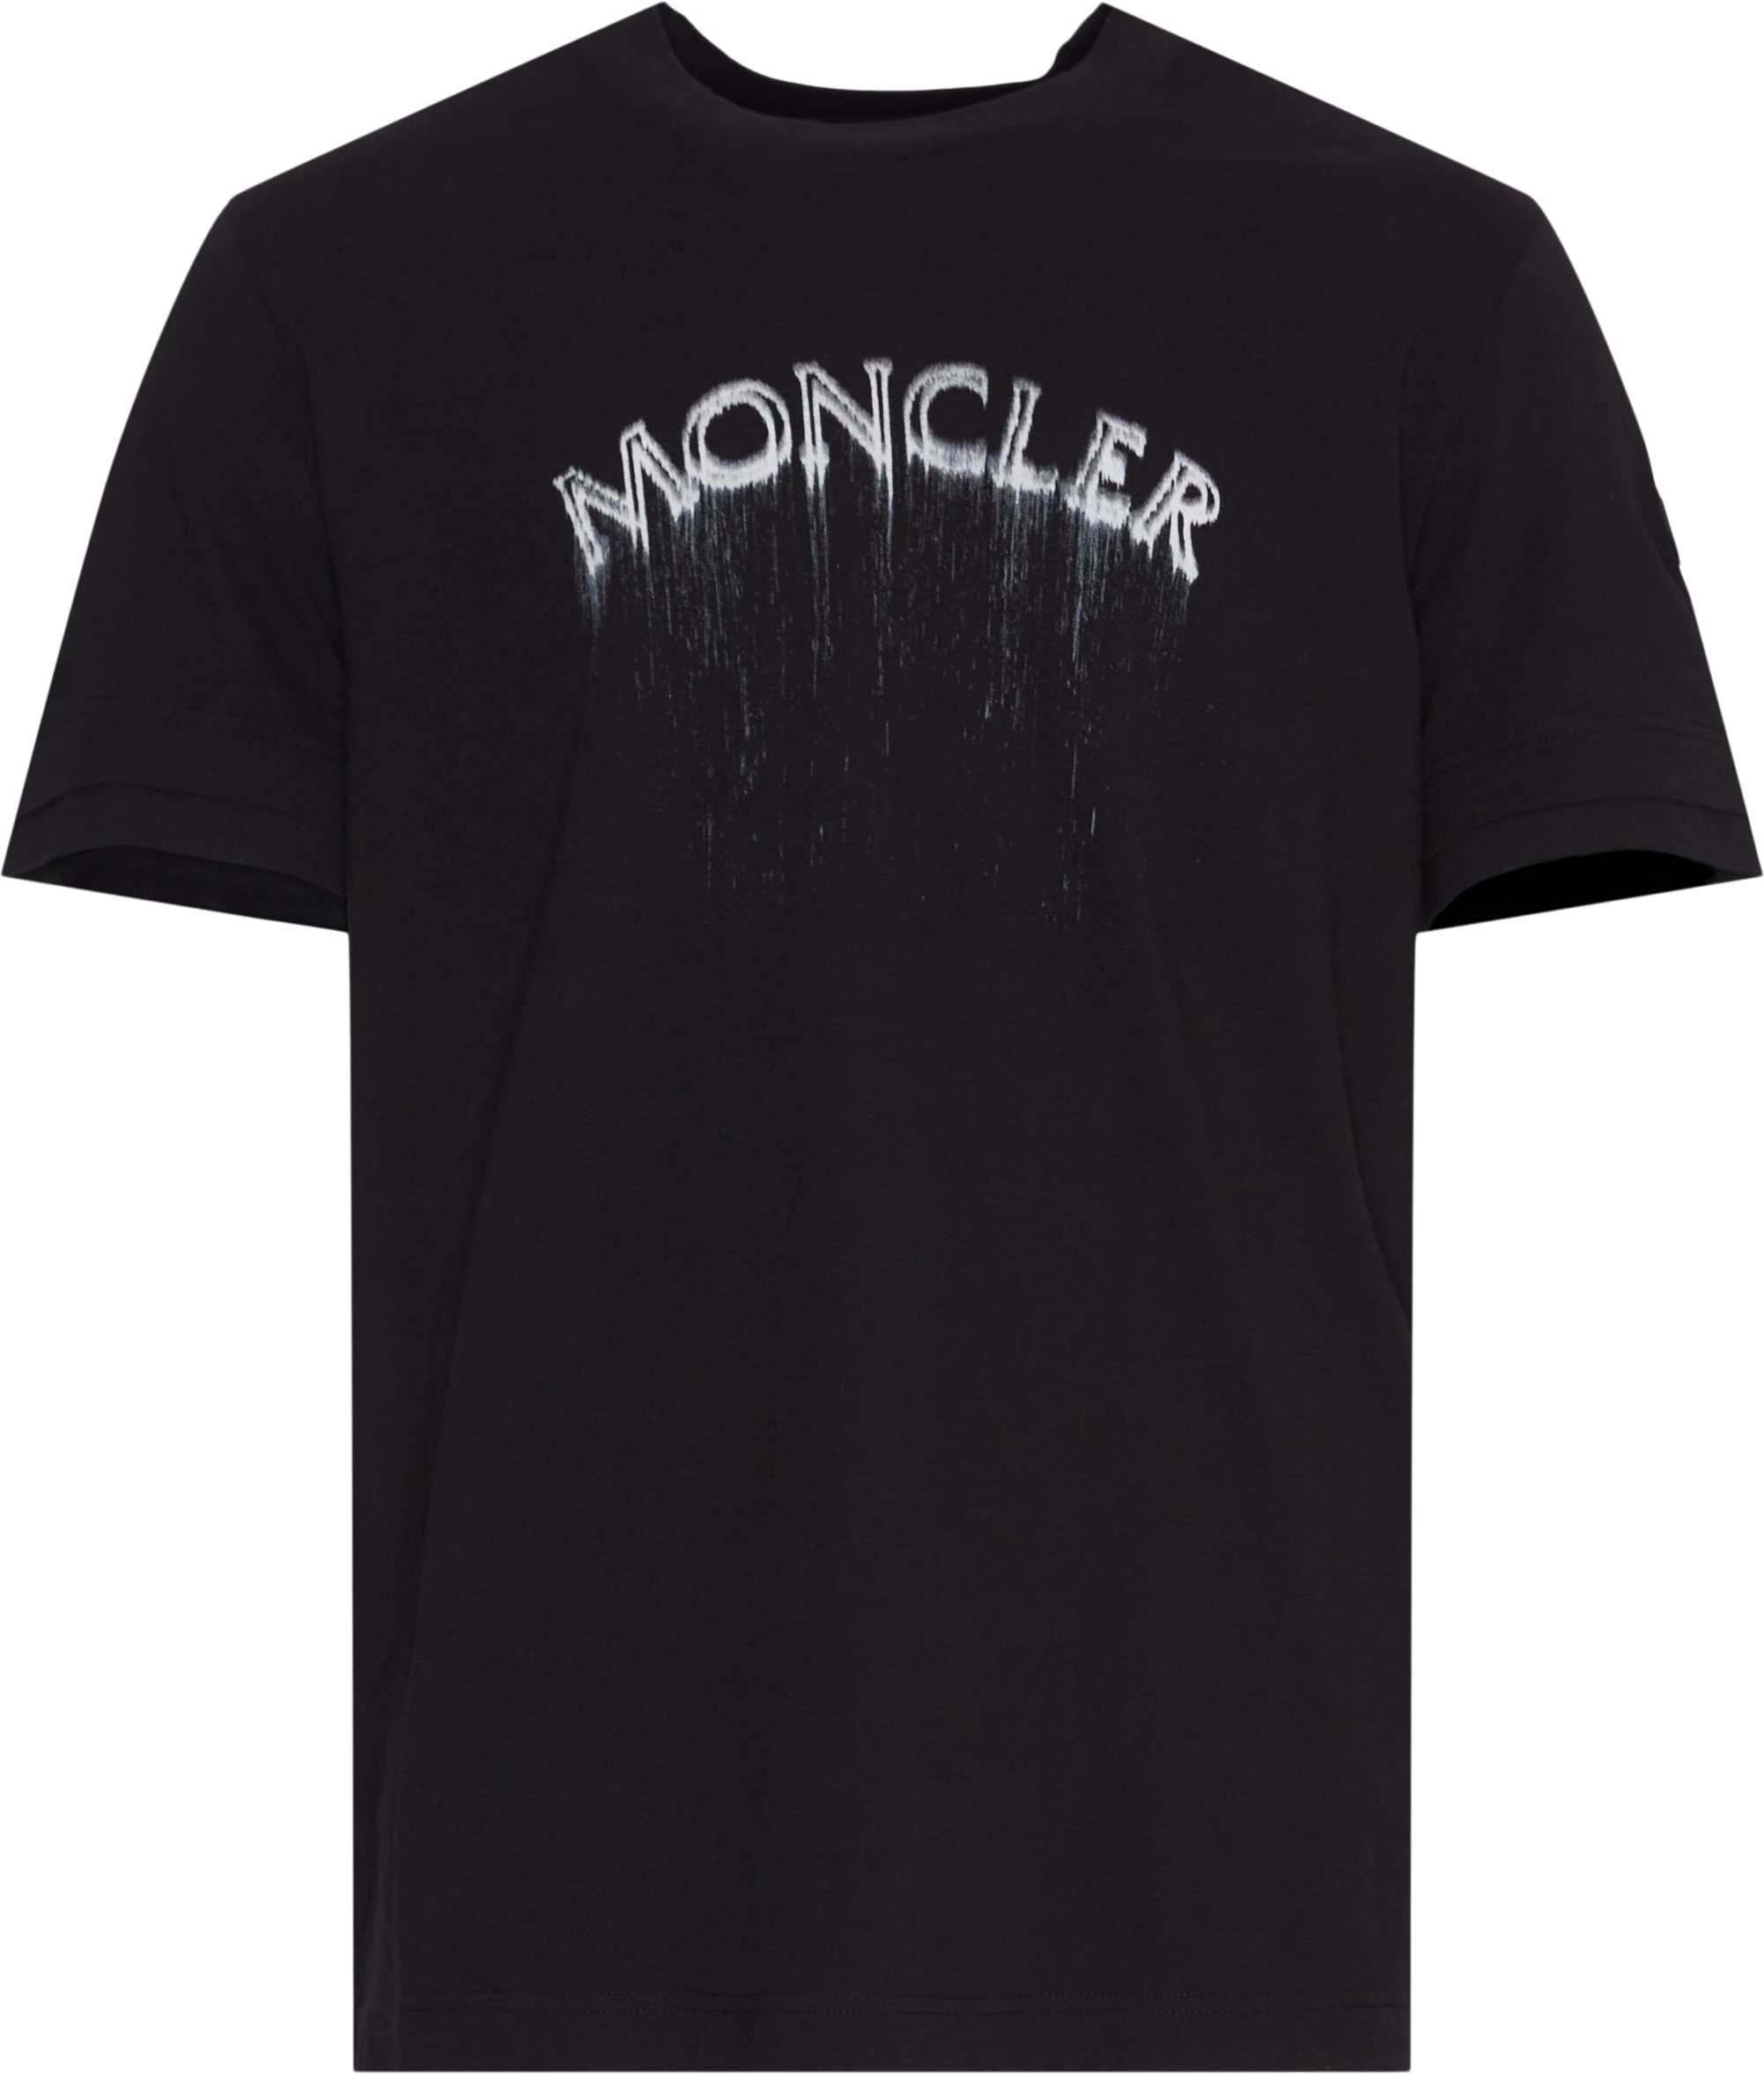 Moncler T-shirts 8C00002 89A17 2401 Black